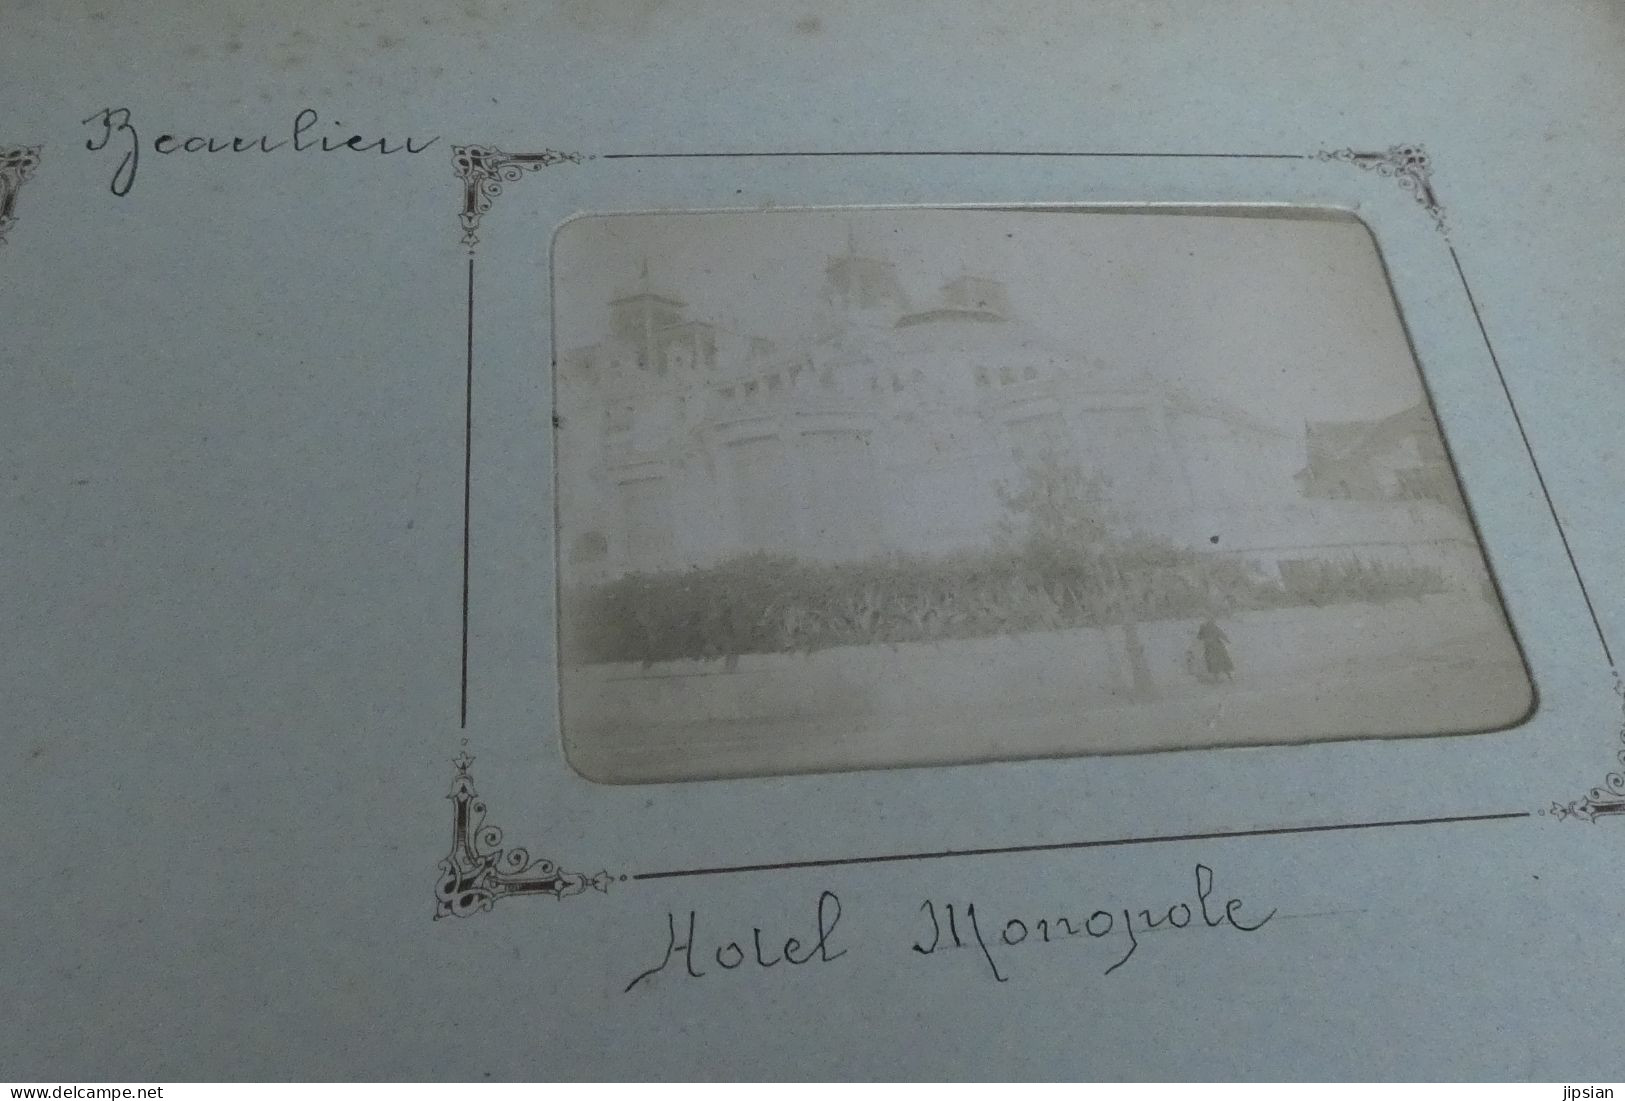 lot de 116 photos originales de 1903 de Nice ainsi que Beaulieu et Marseille M1